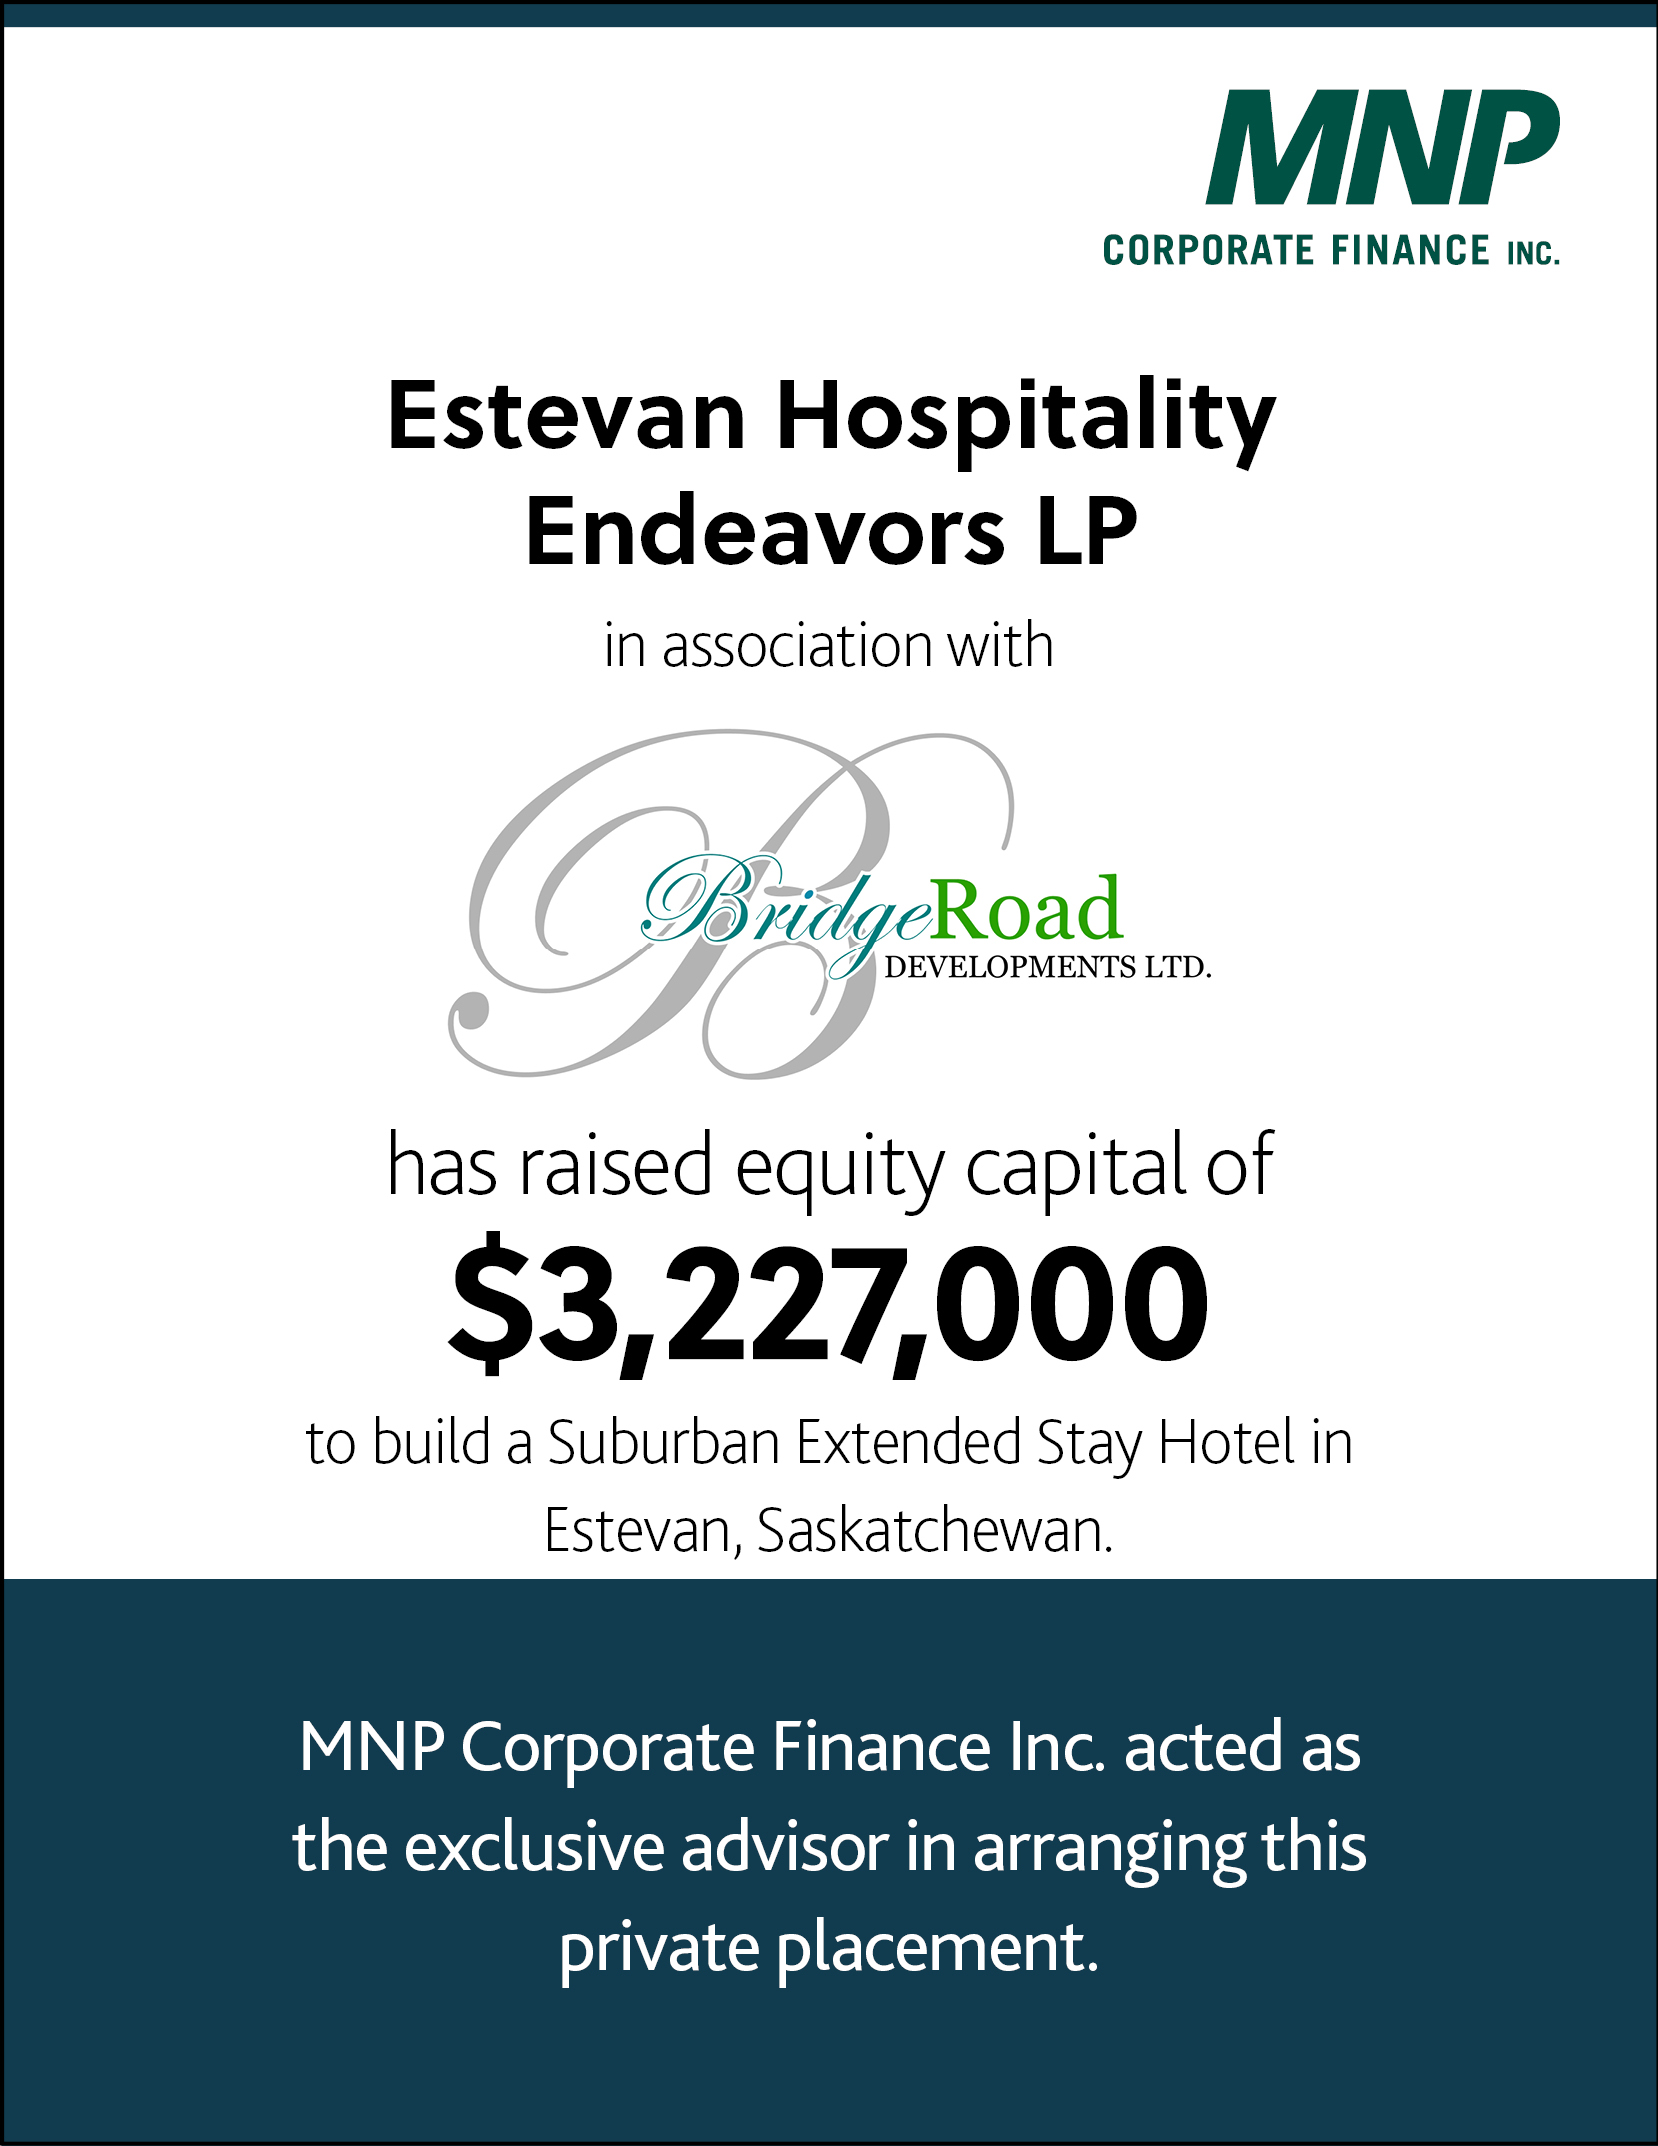 Estevan Hospitality Endeavors LP in association with BridgeRoad Developments has raised equity capital of $3,227,000 to build a Suburban Extended Stay Hotel in Estevan, Saskatchewan